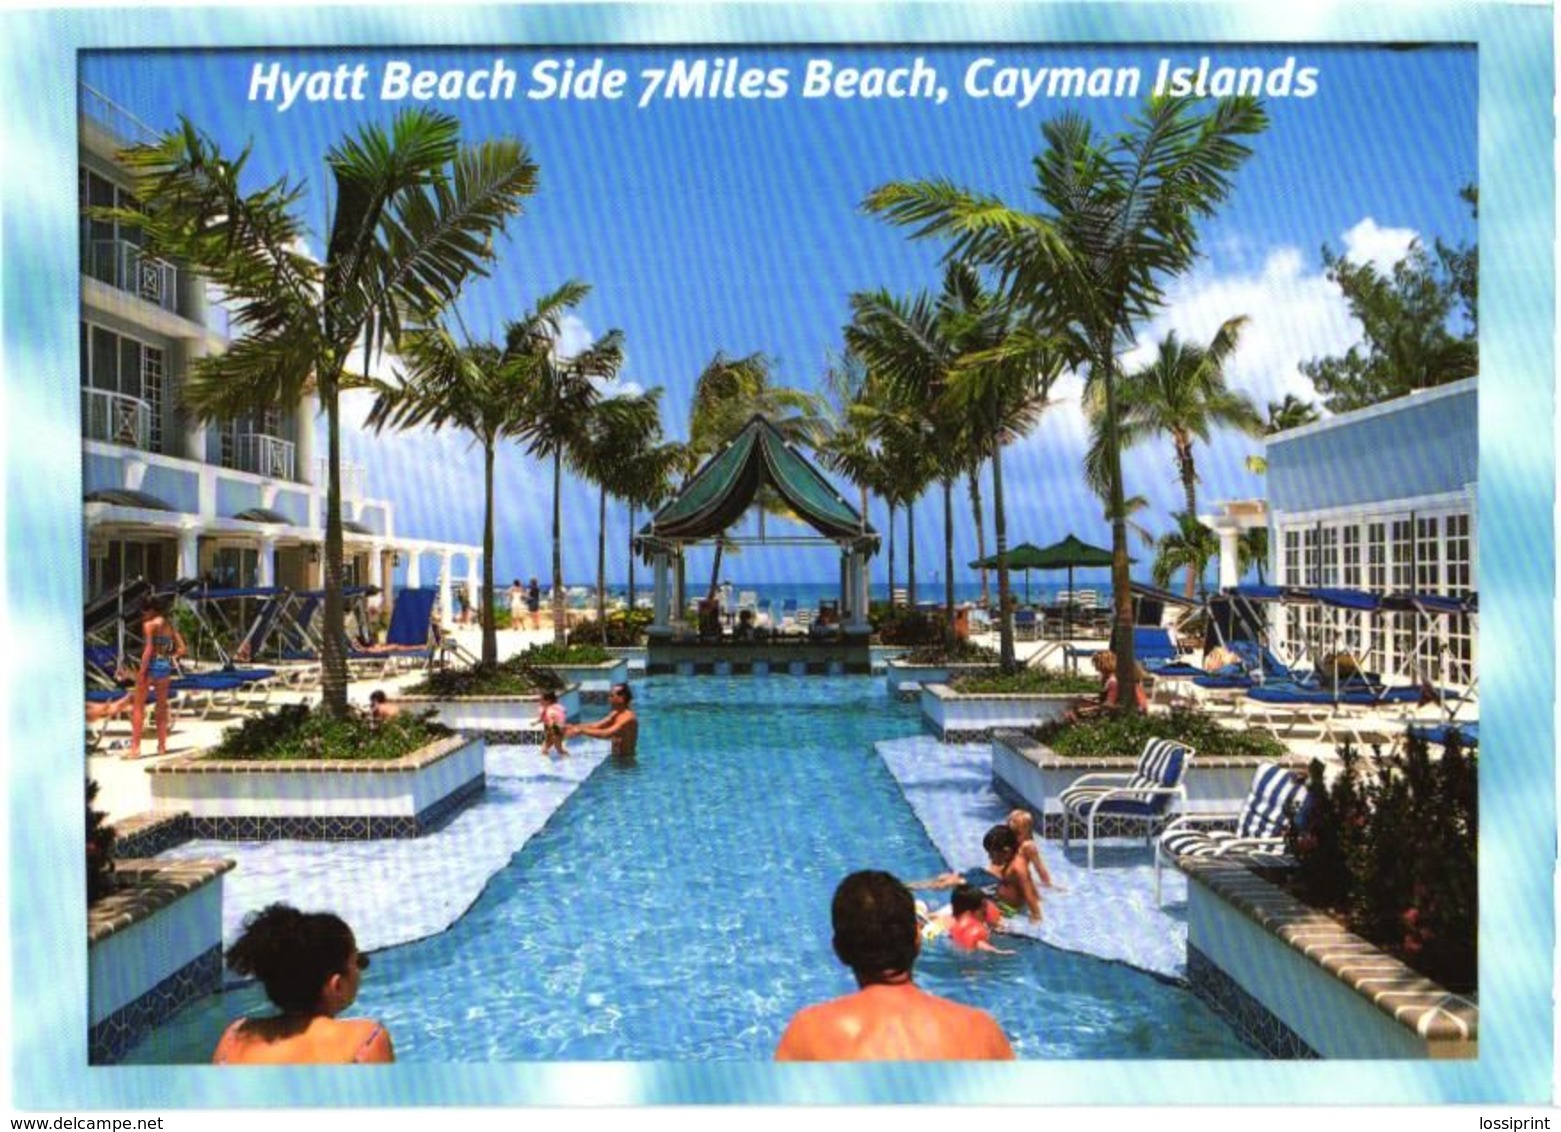 British West Indies:Cayman Islands, Grand Cayman, Hyatt Beach Side 7 Miles Beach - Cayman Islands